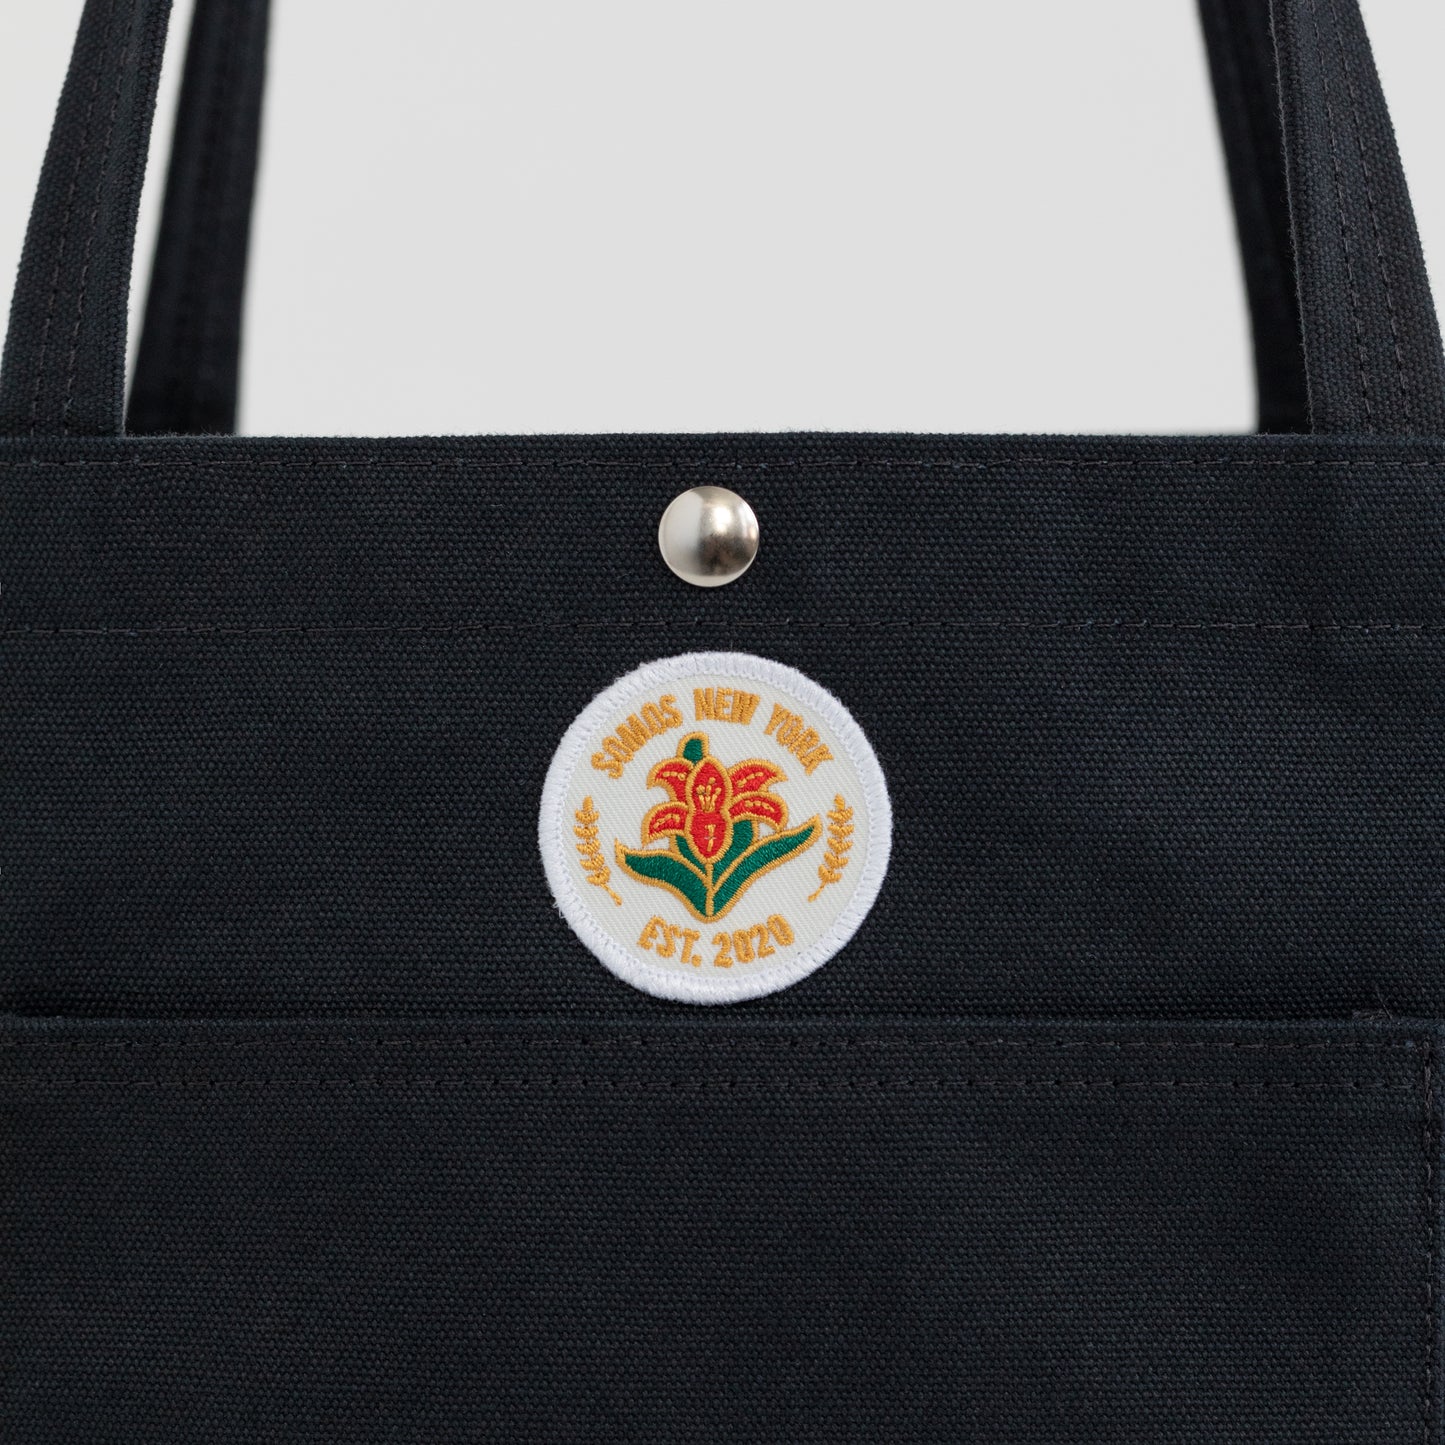 Flower Emblem Medium Tote Bag - Black